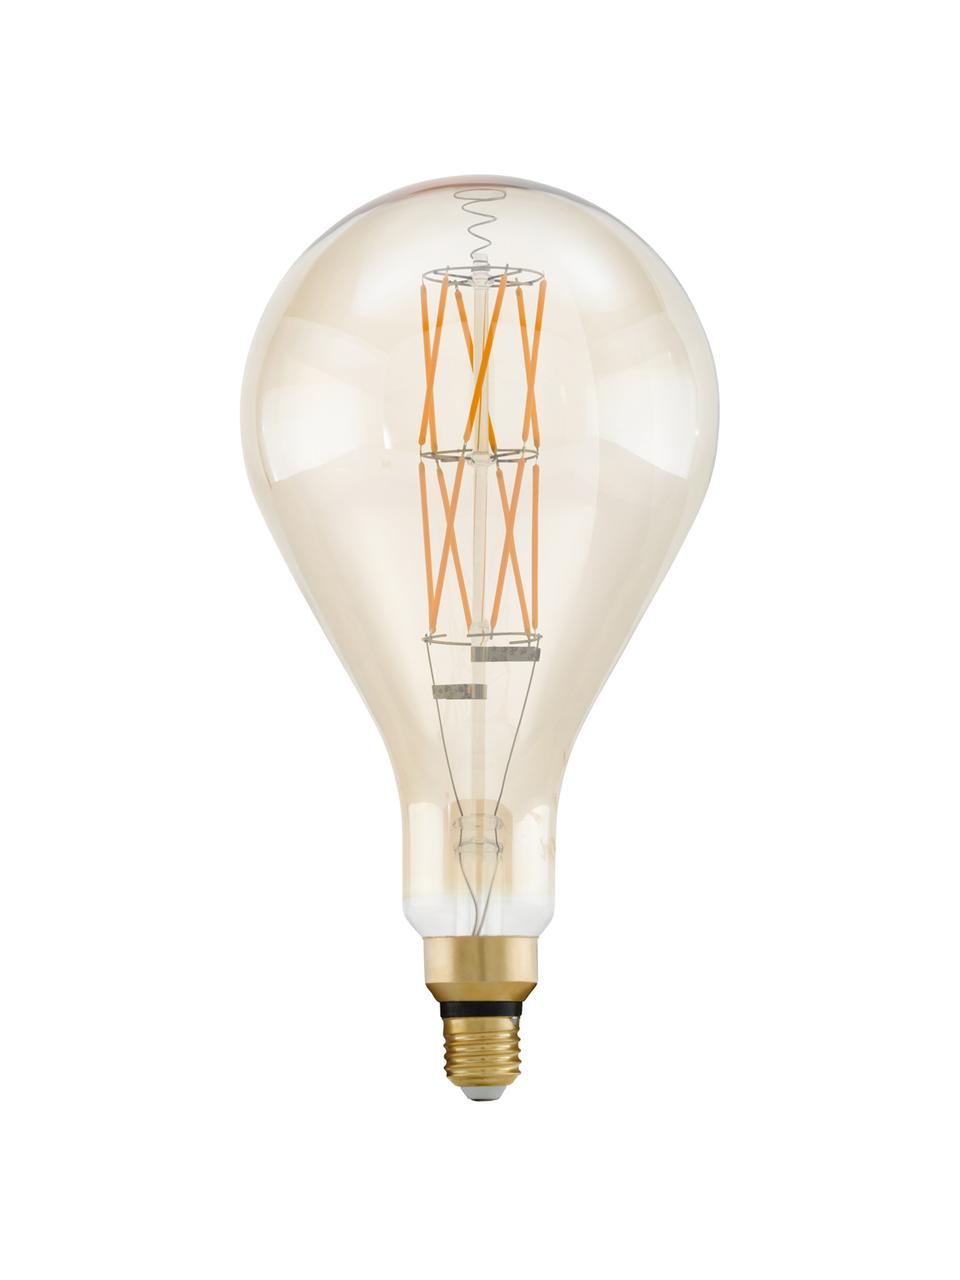 Lampadina E27 XL, 806lm, bianco caldo, 1 pz, Paralume: vetro, Base lampadina: alluminio, Trasparente ambra, Ø 16 x Alt. 30 cm